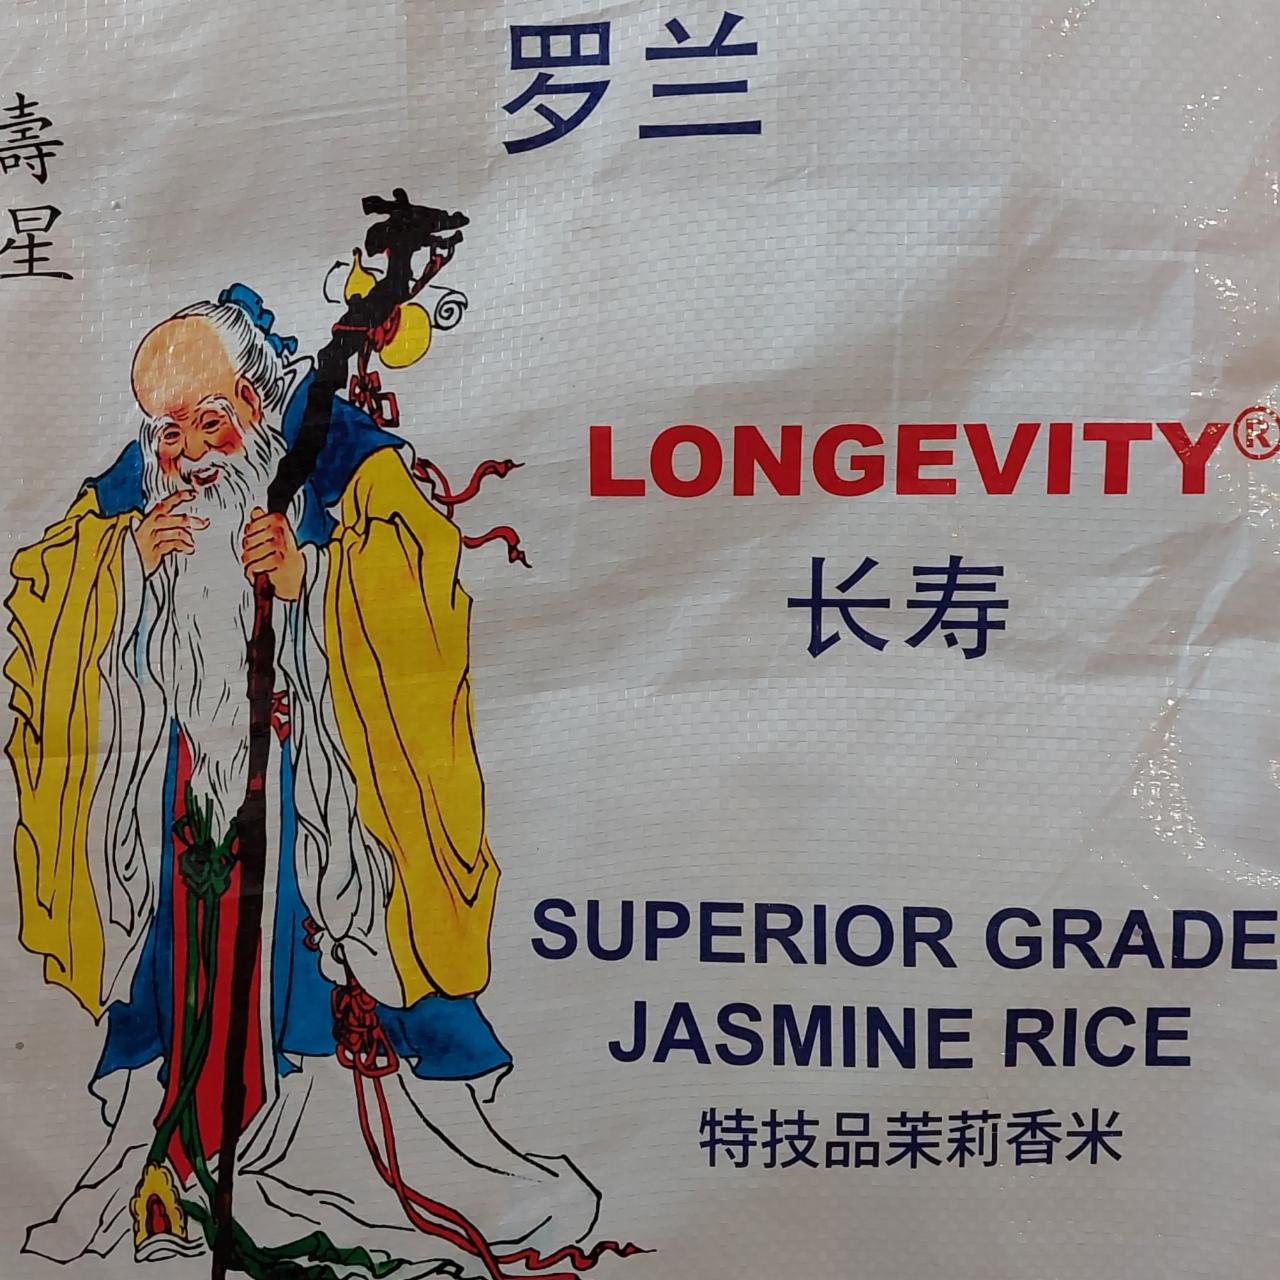 Fotografie - Superior grande jasmine rice Longevity Lo Lan